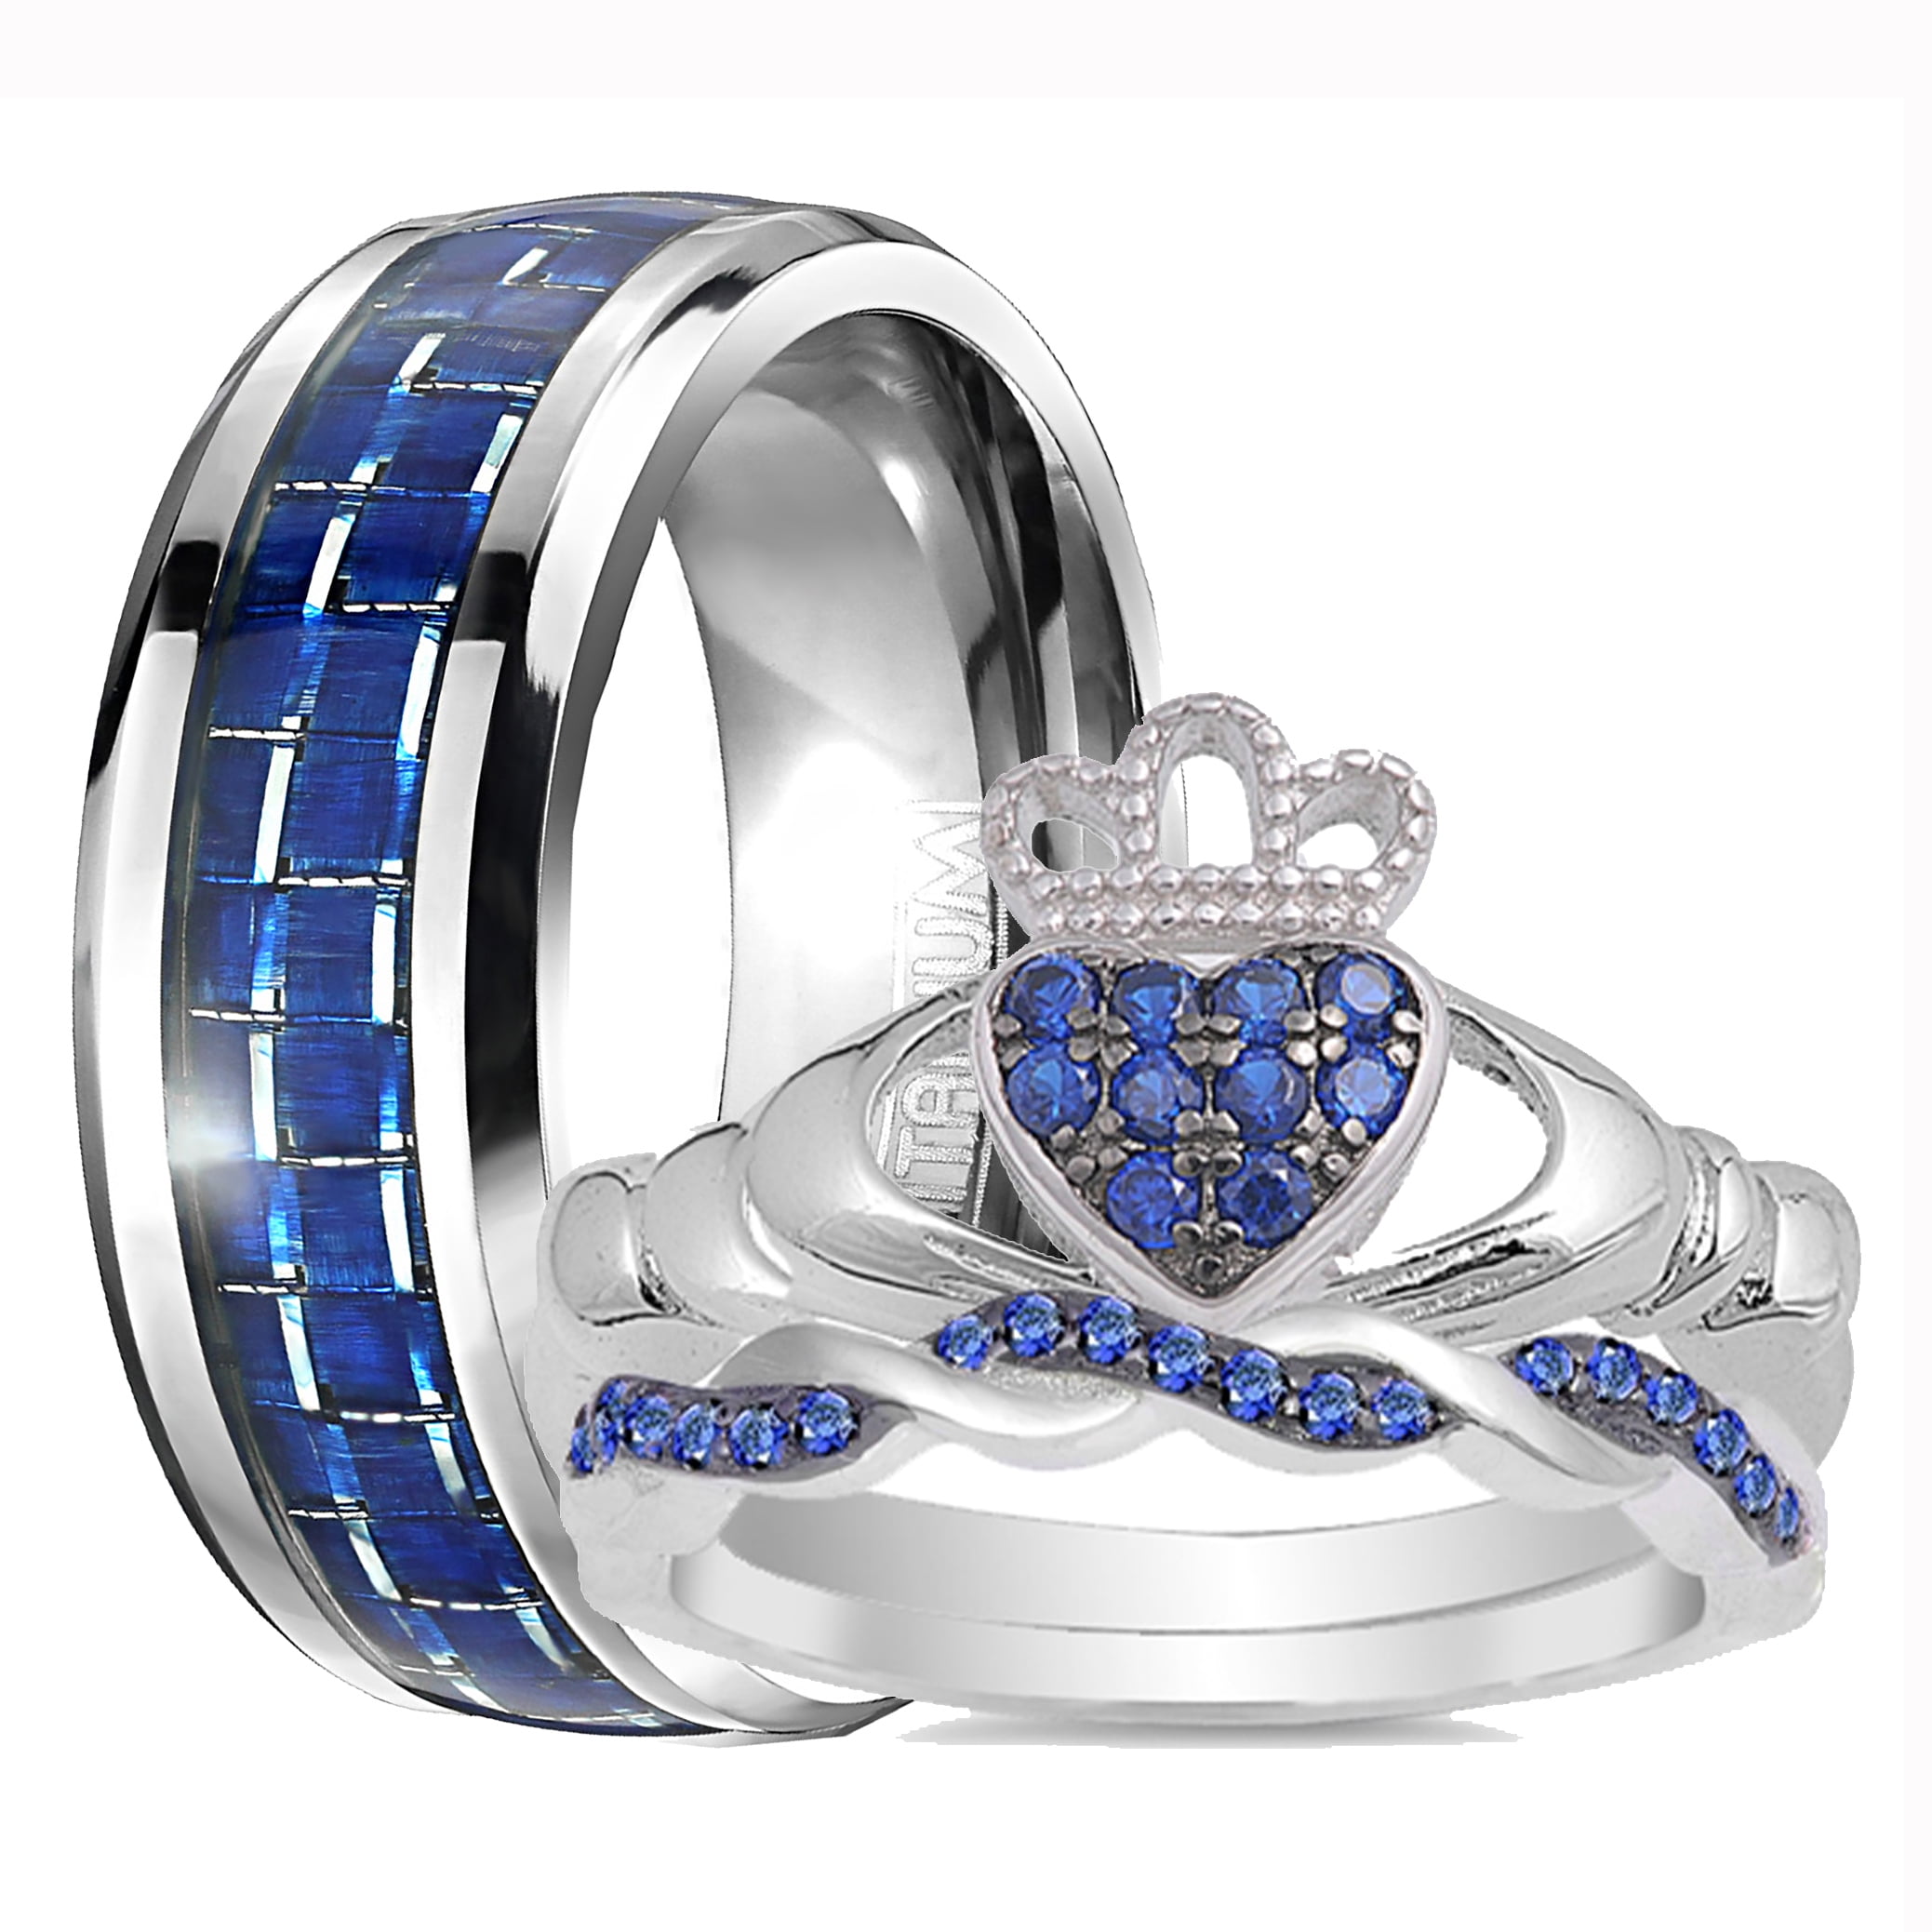 Premium Couple Ring Set Titanium and 925 Sterling Silver Wedding Ring Set